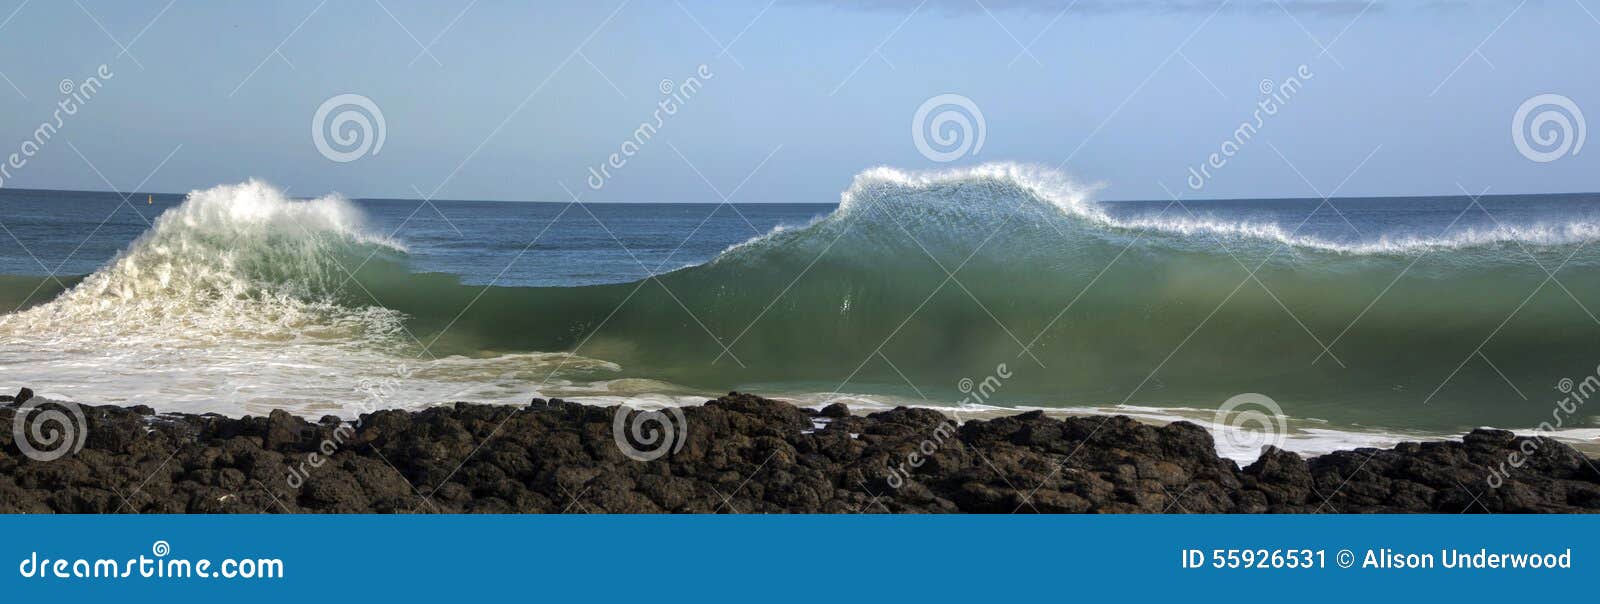 waves pounding on basalt rocks at ocean beach bunbury western australia